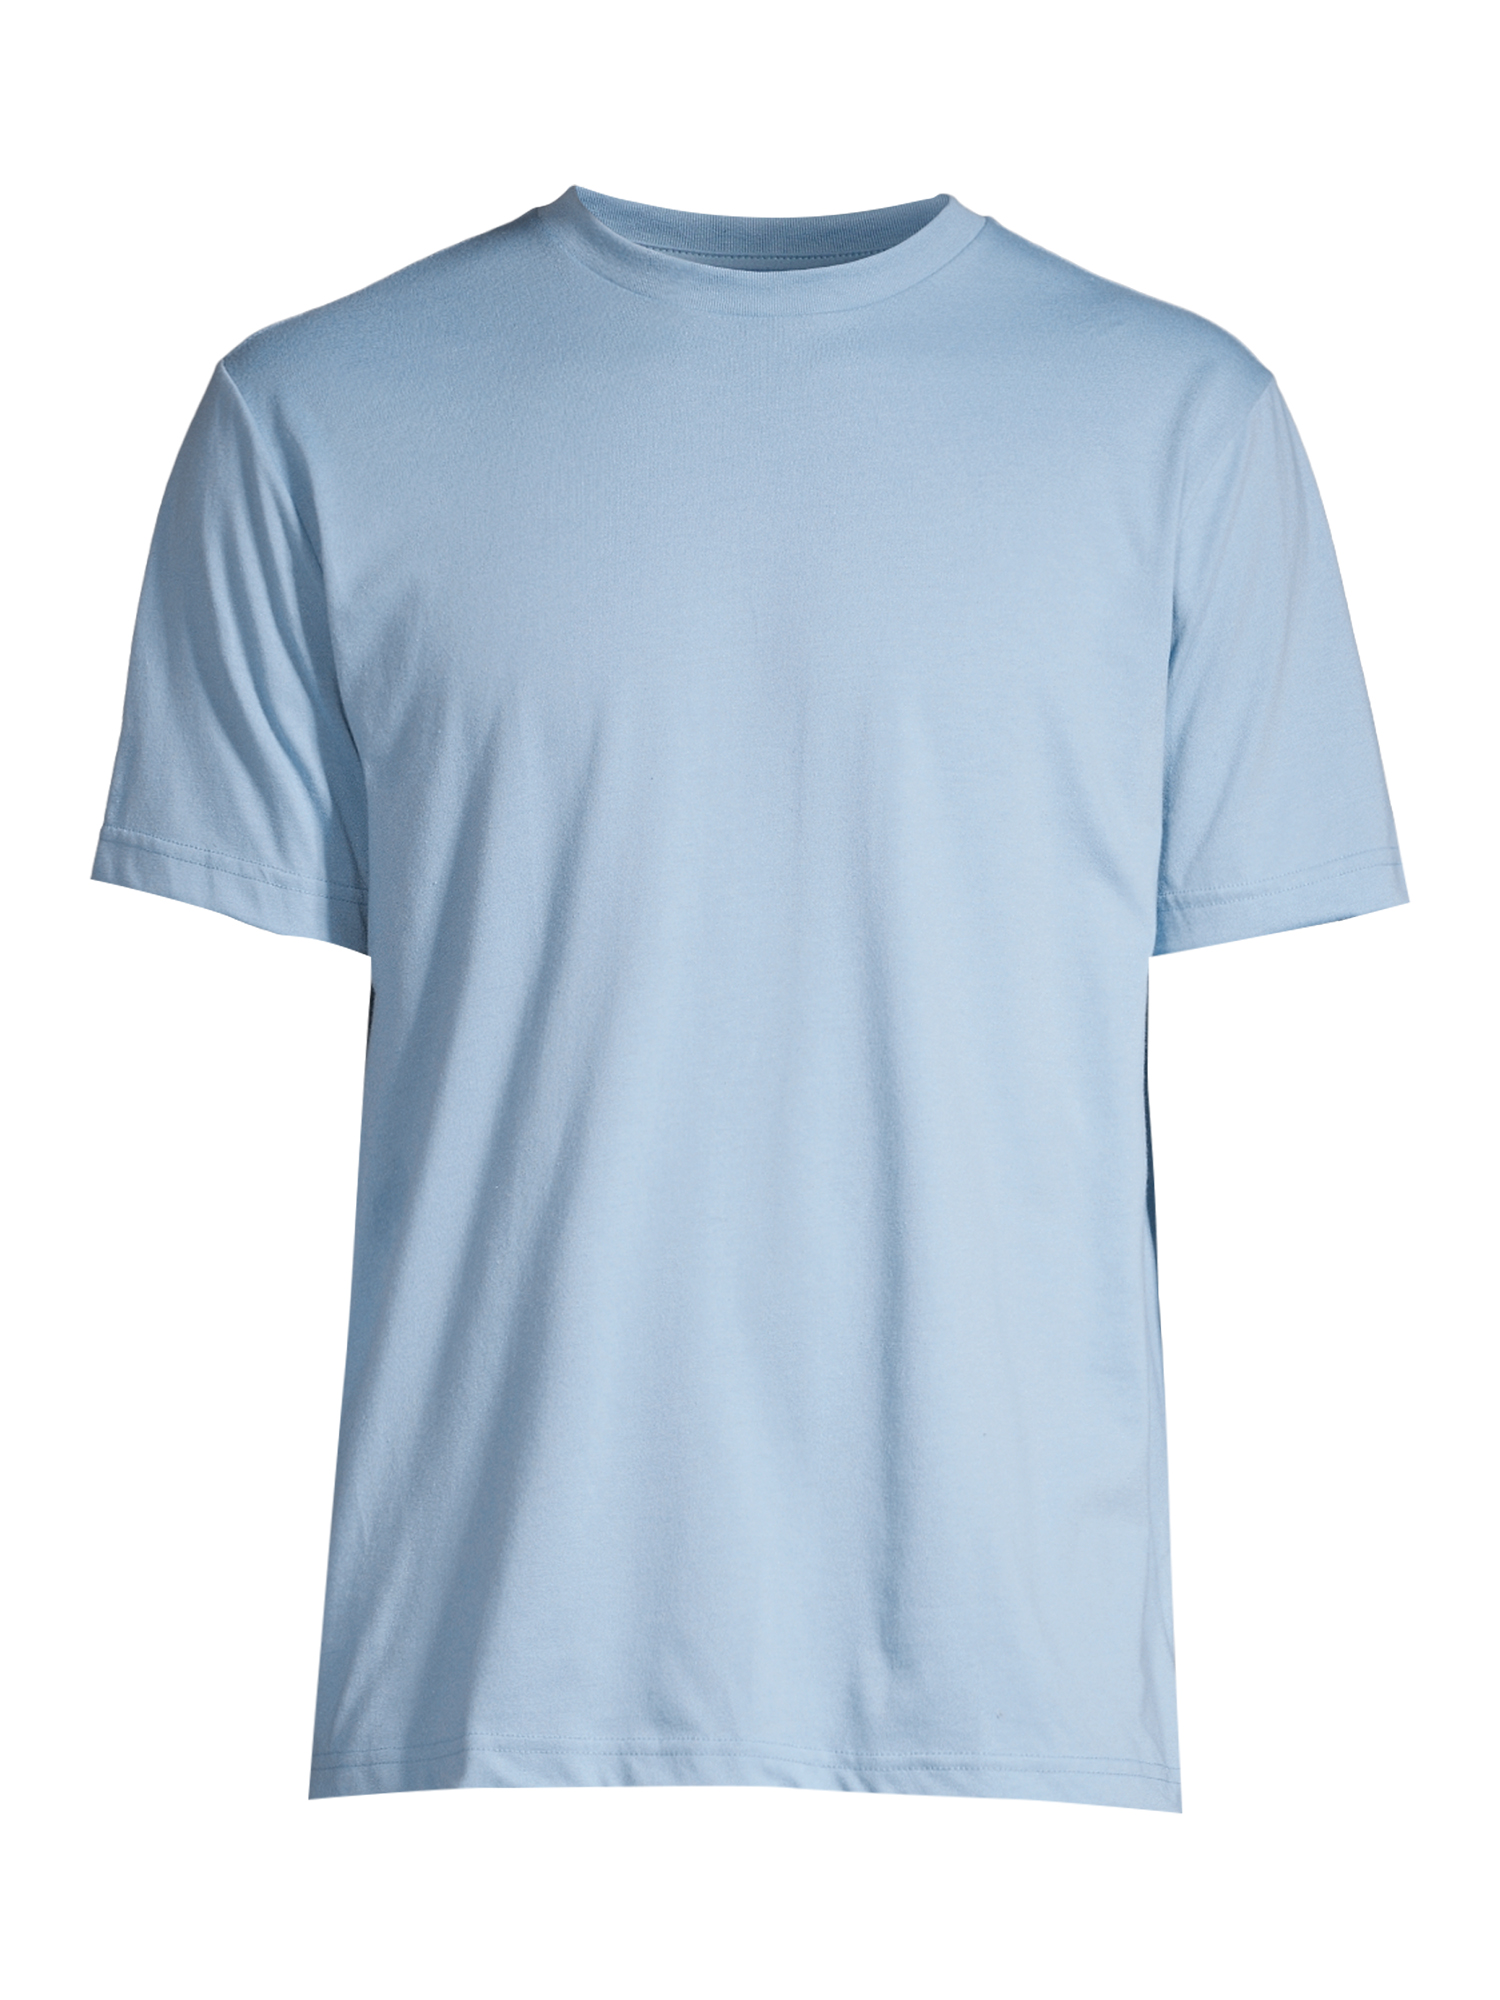 George Men's and Big Men's Short Sleeve Crewneck T-Shirt - image 5 of 5